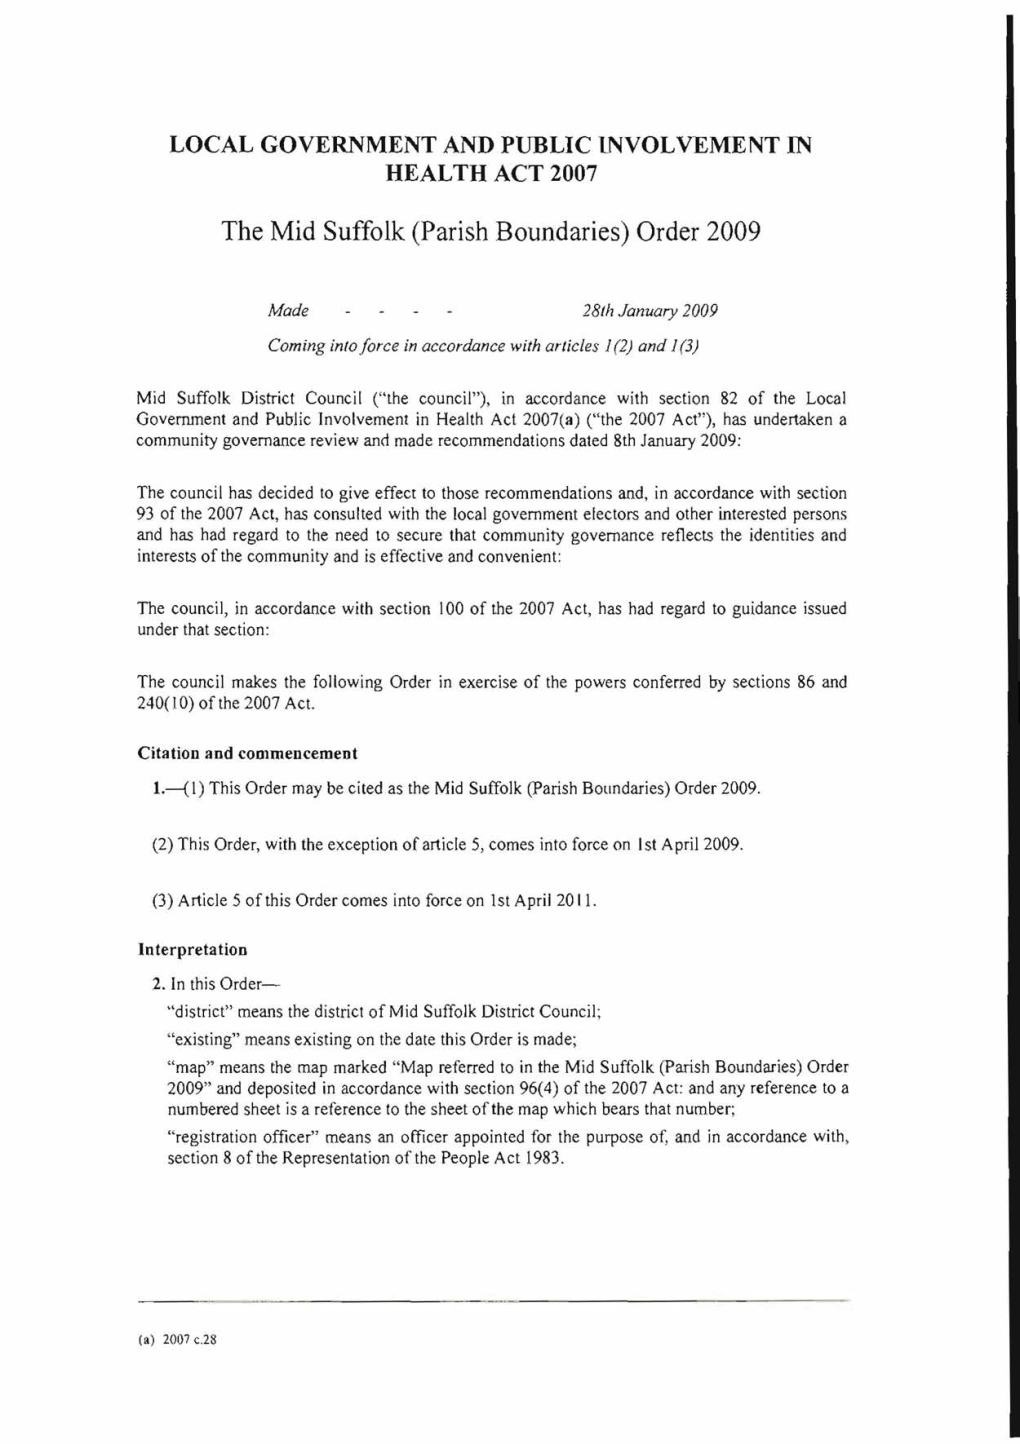 The Mid Suffolk (Parish Boundaries) Order 2009